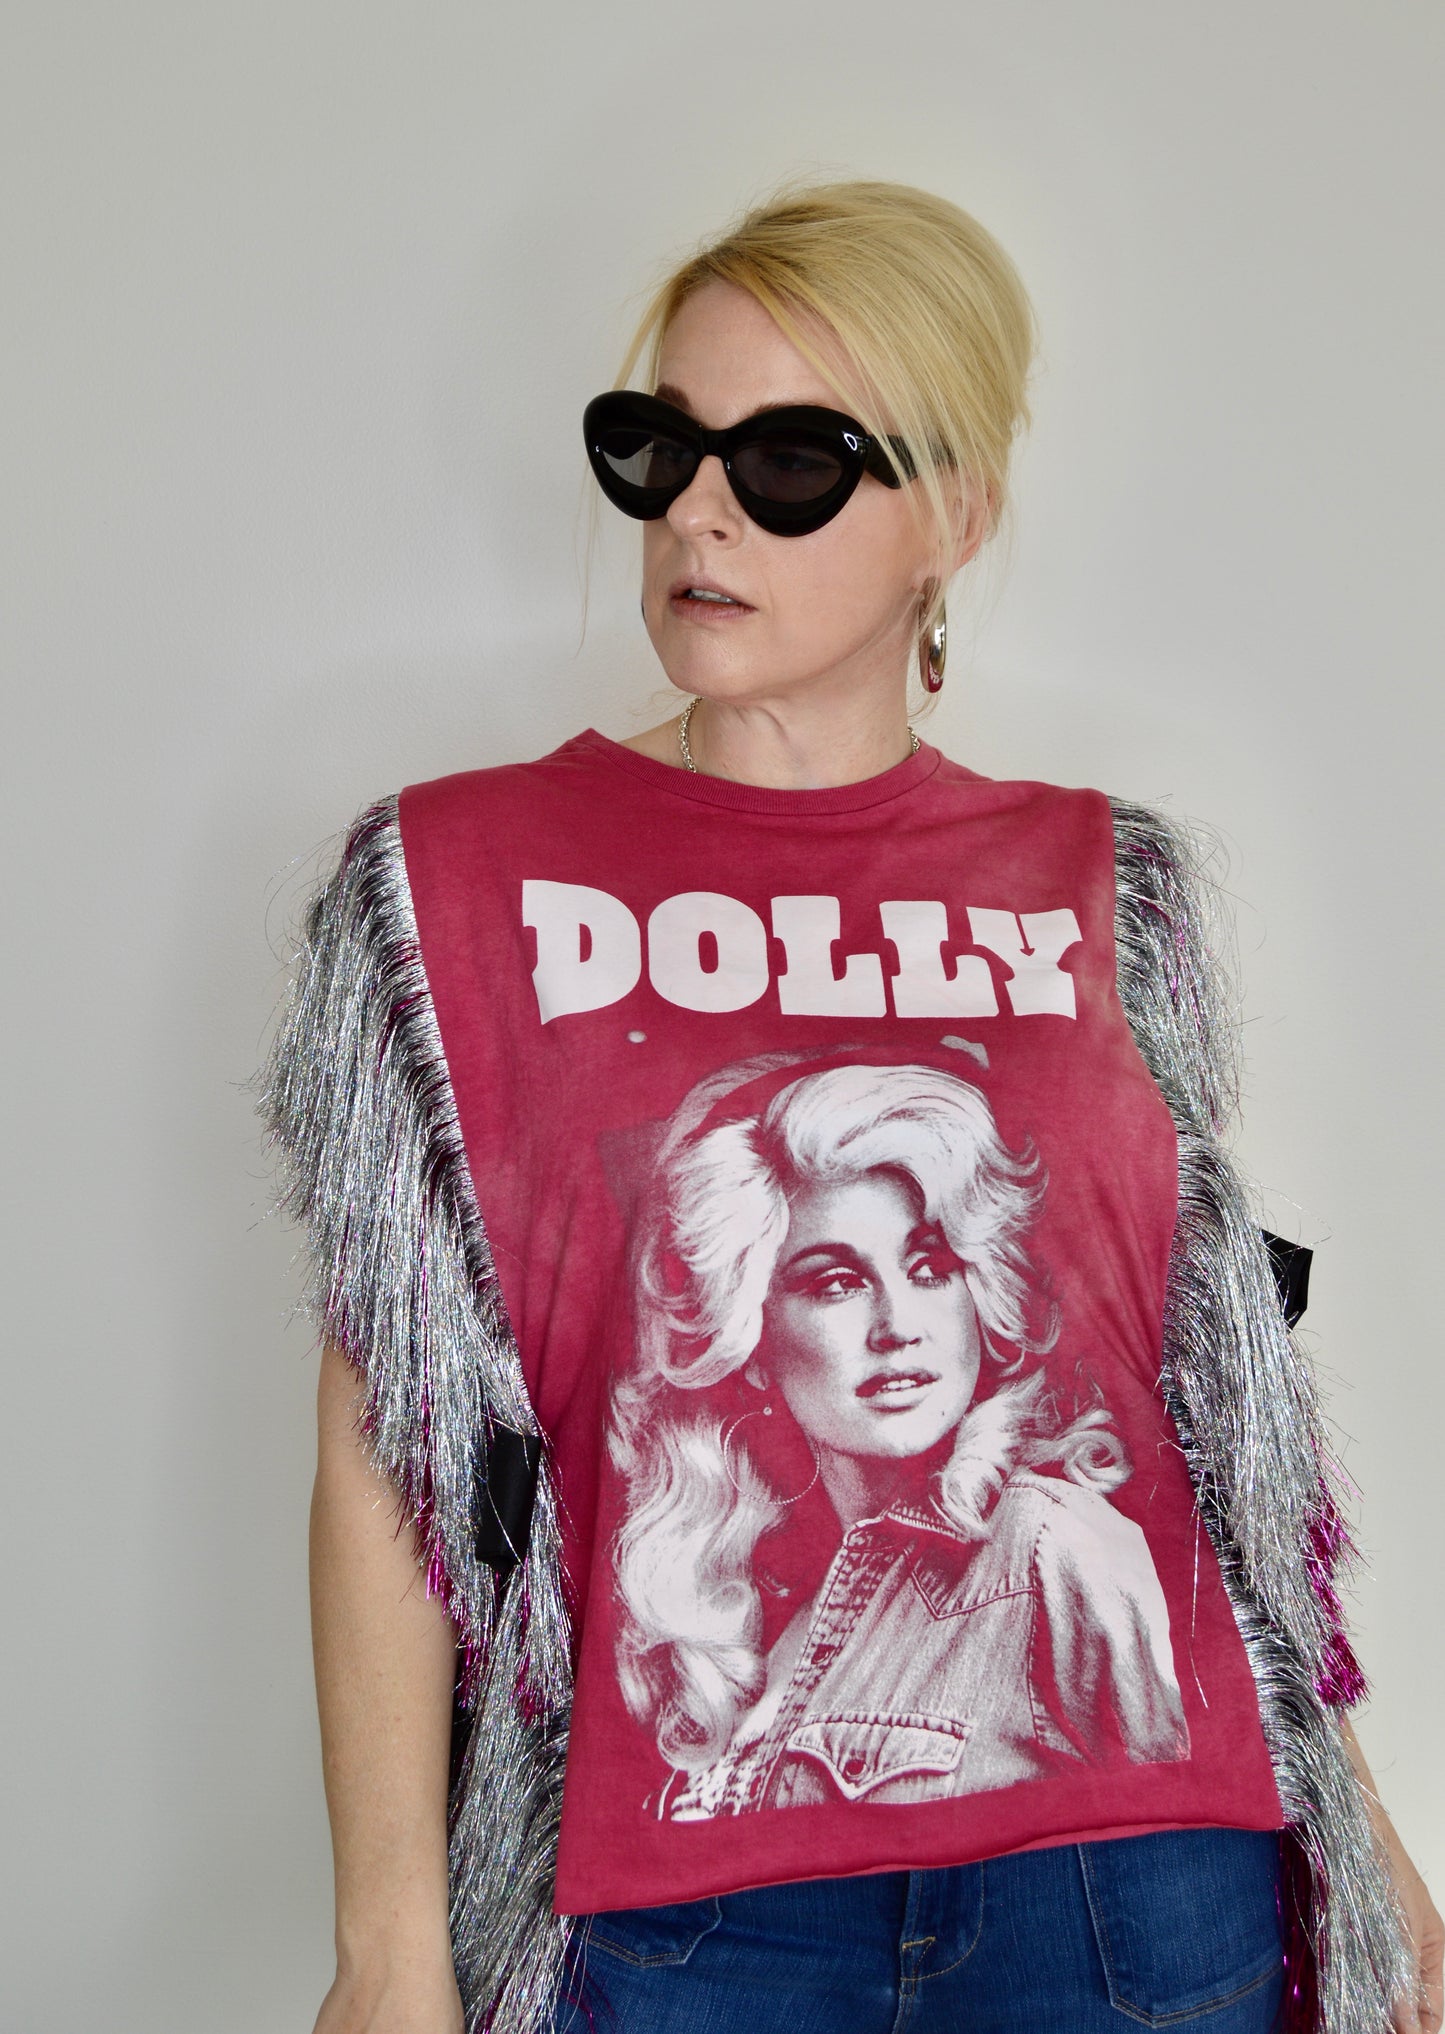 Dolly Parton Pink OG Tinsel Fringe Top with Side Bows